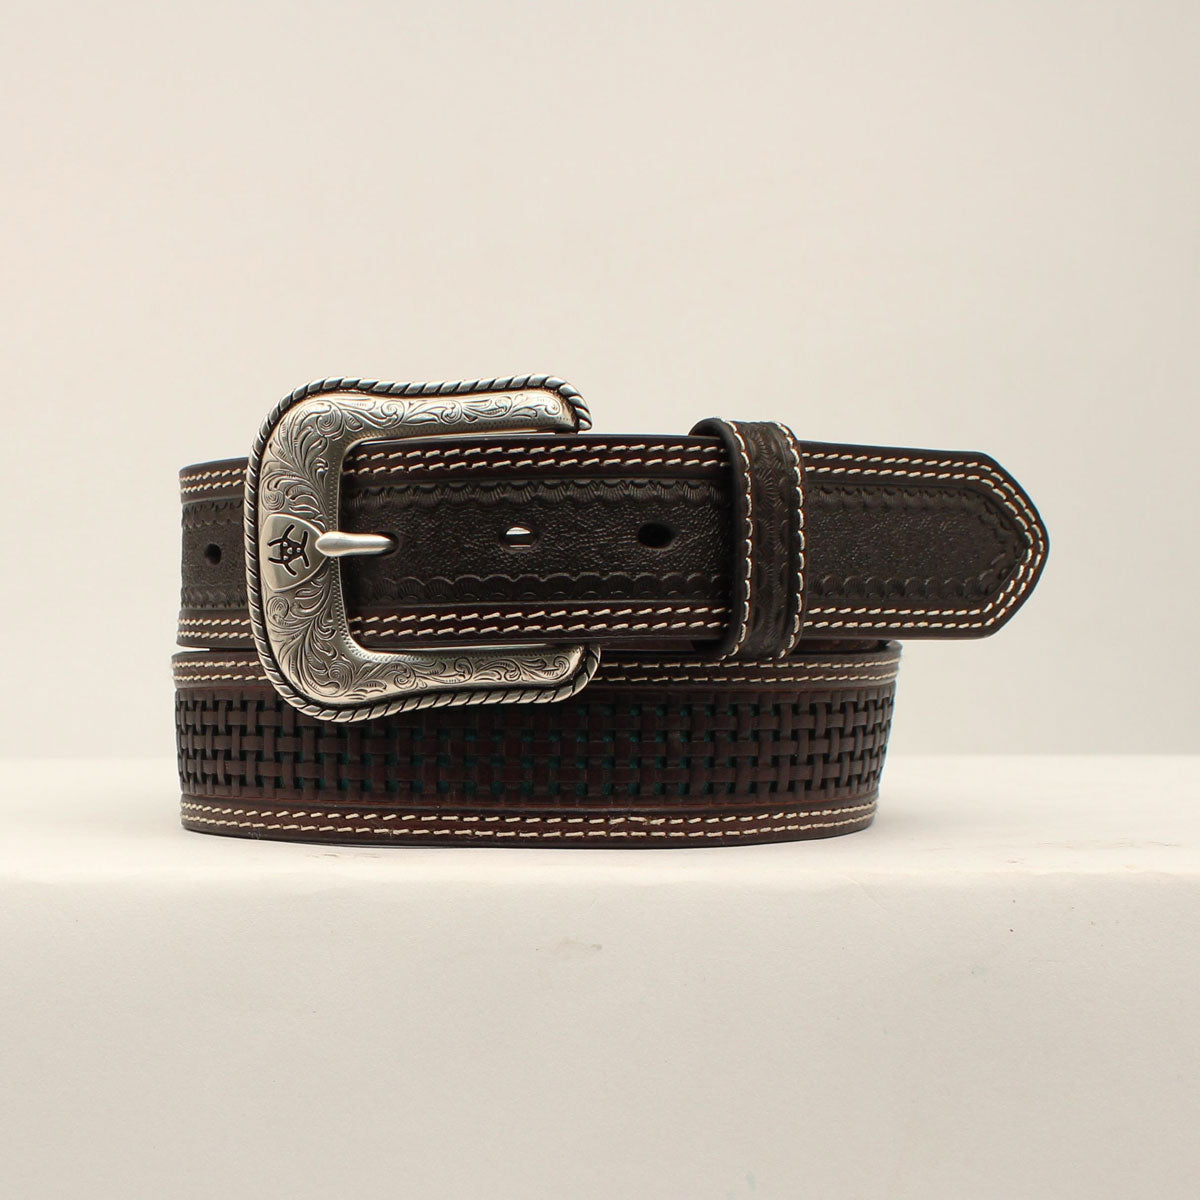 Ariat Men's Basketweave Underlay Leather Belt Brown/Turquoise